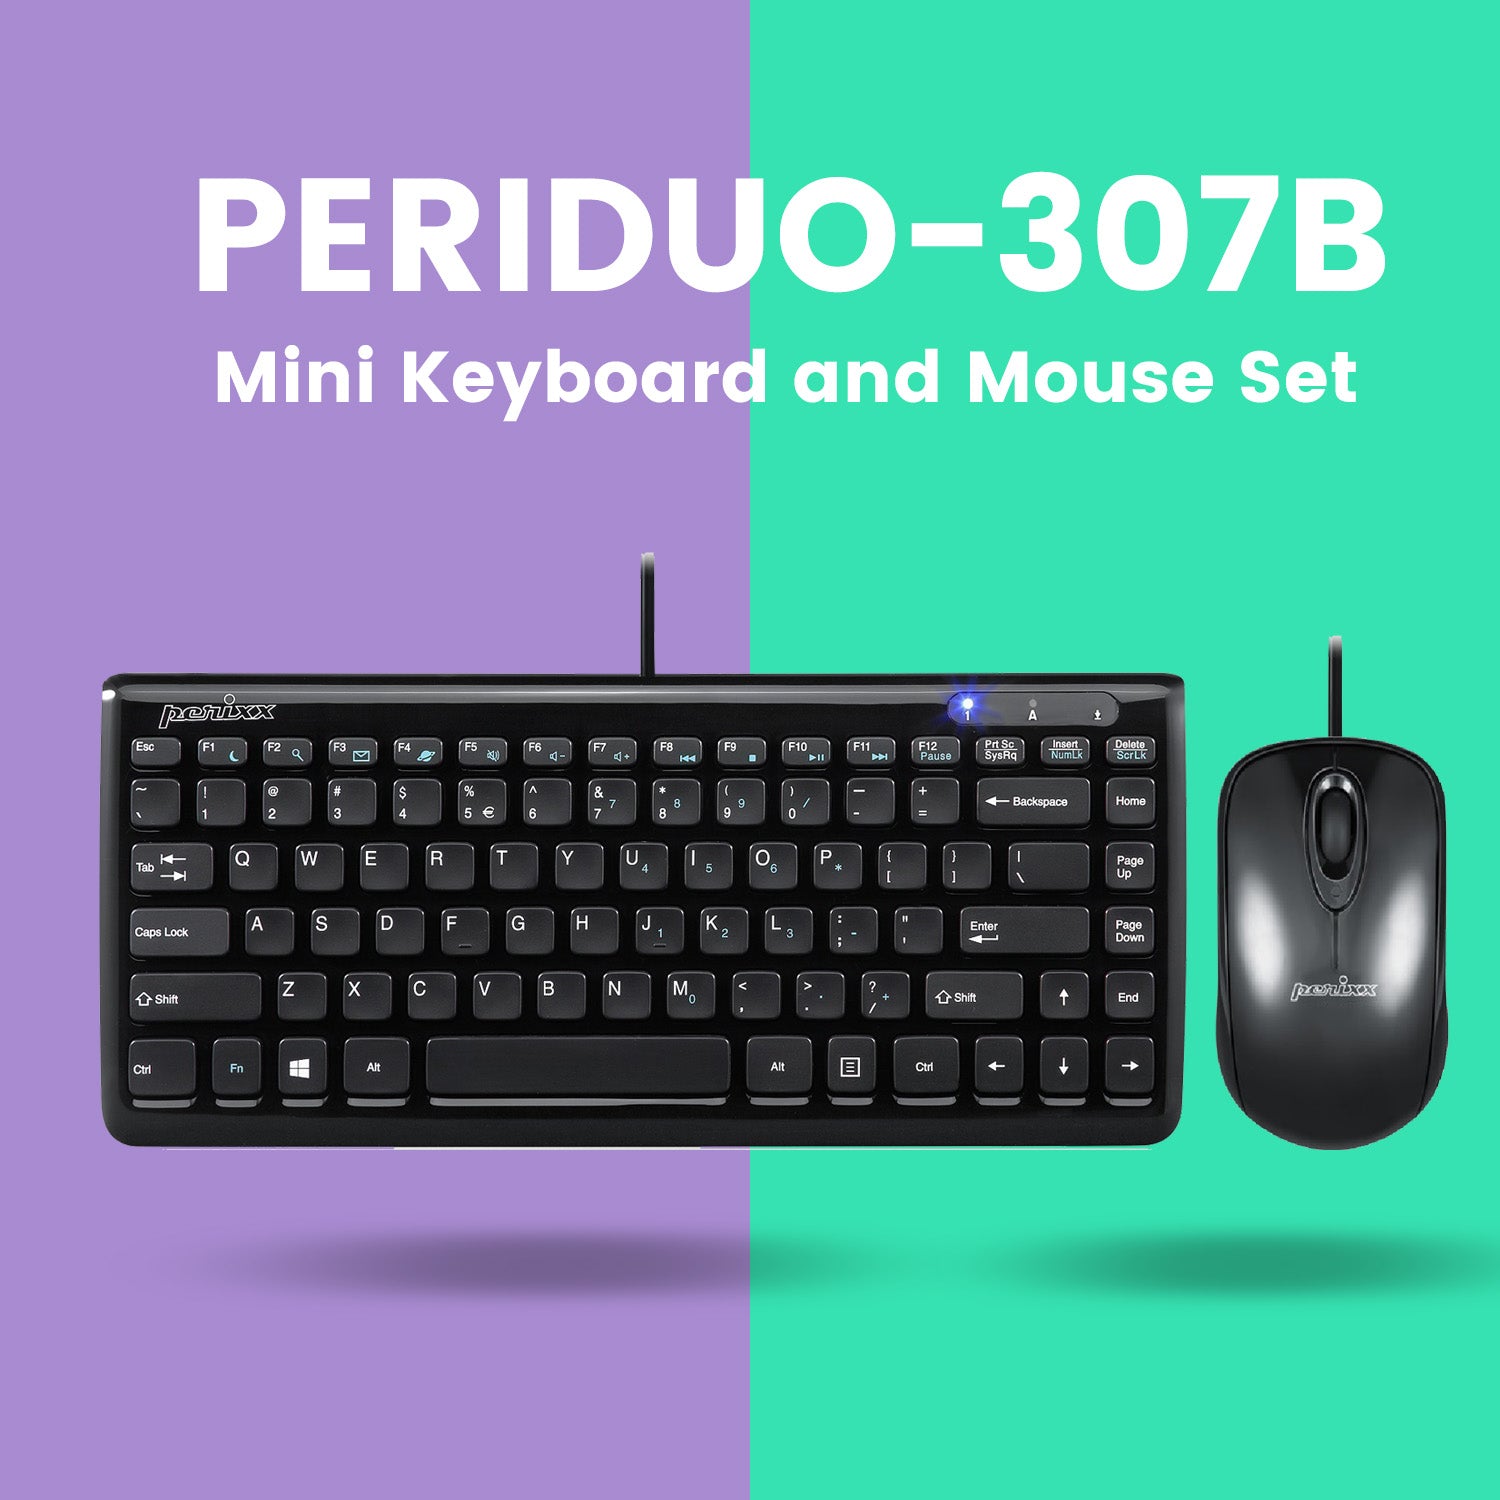  Mini Keyboard and Mouse Set